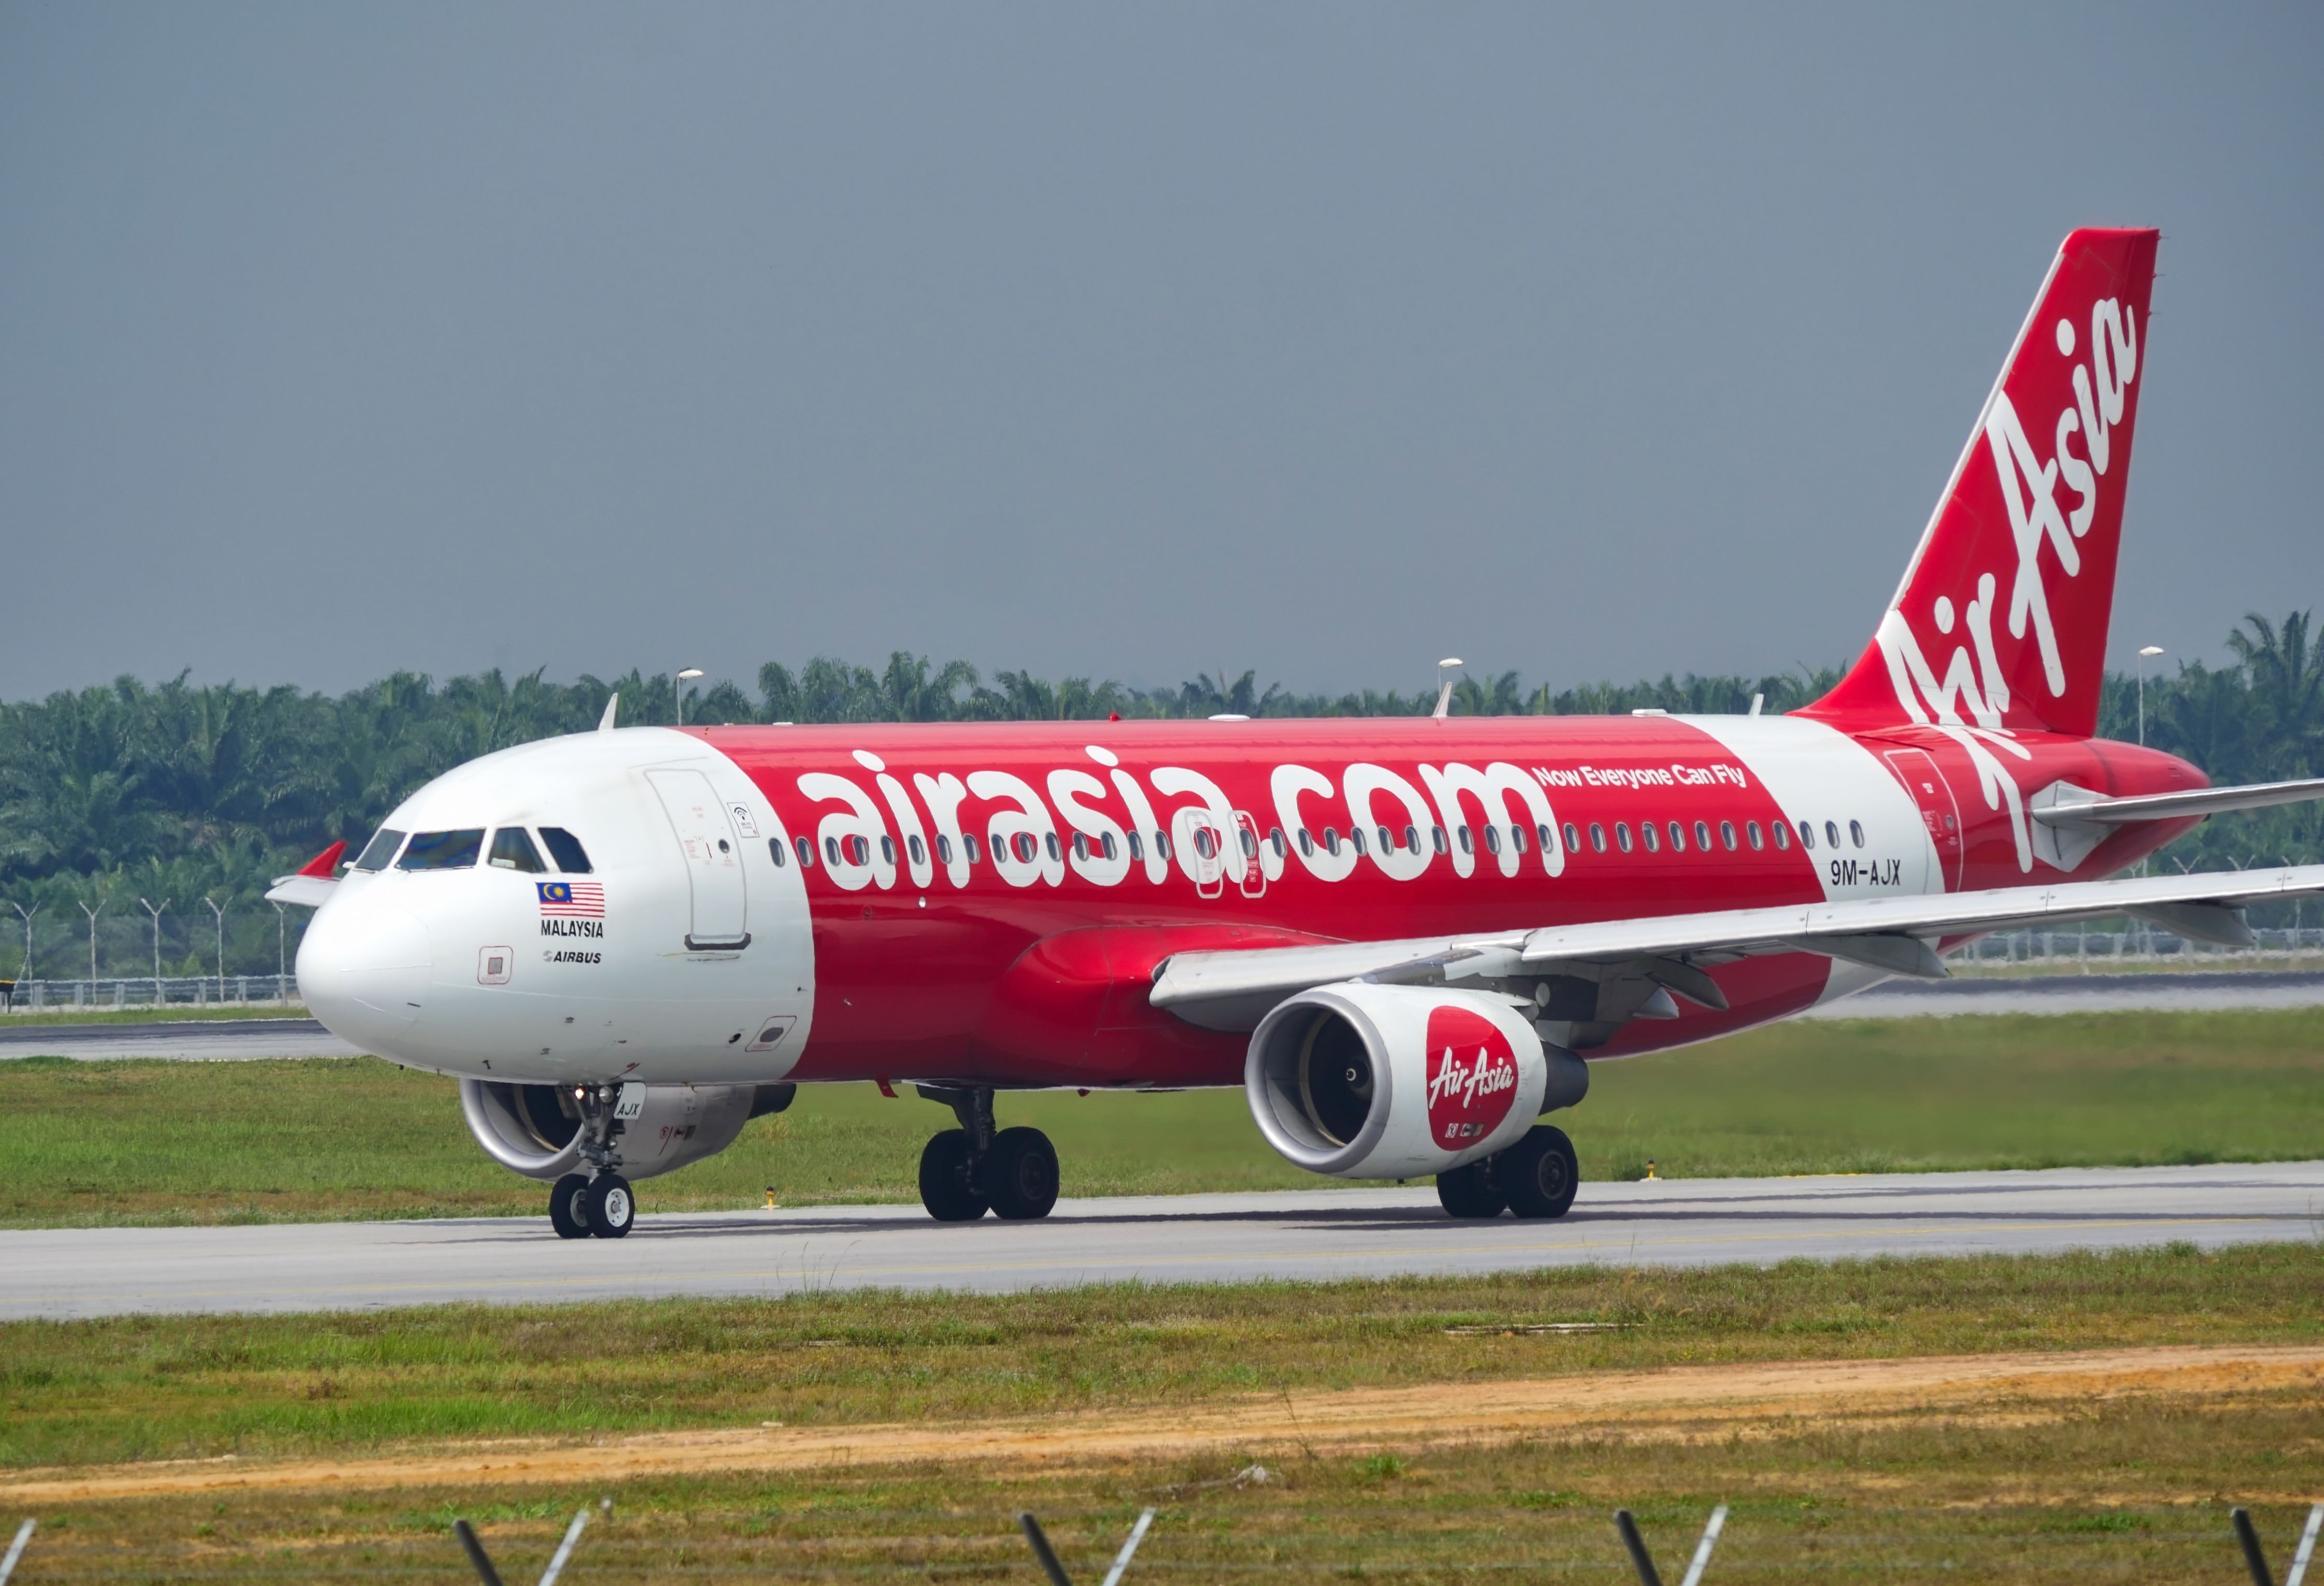 Airasia Airbus A320 on runway